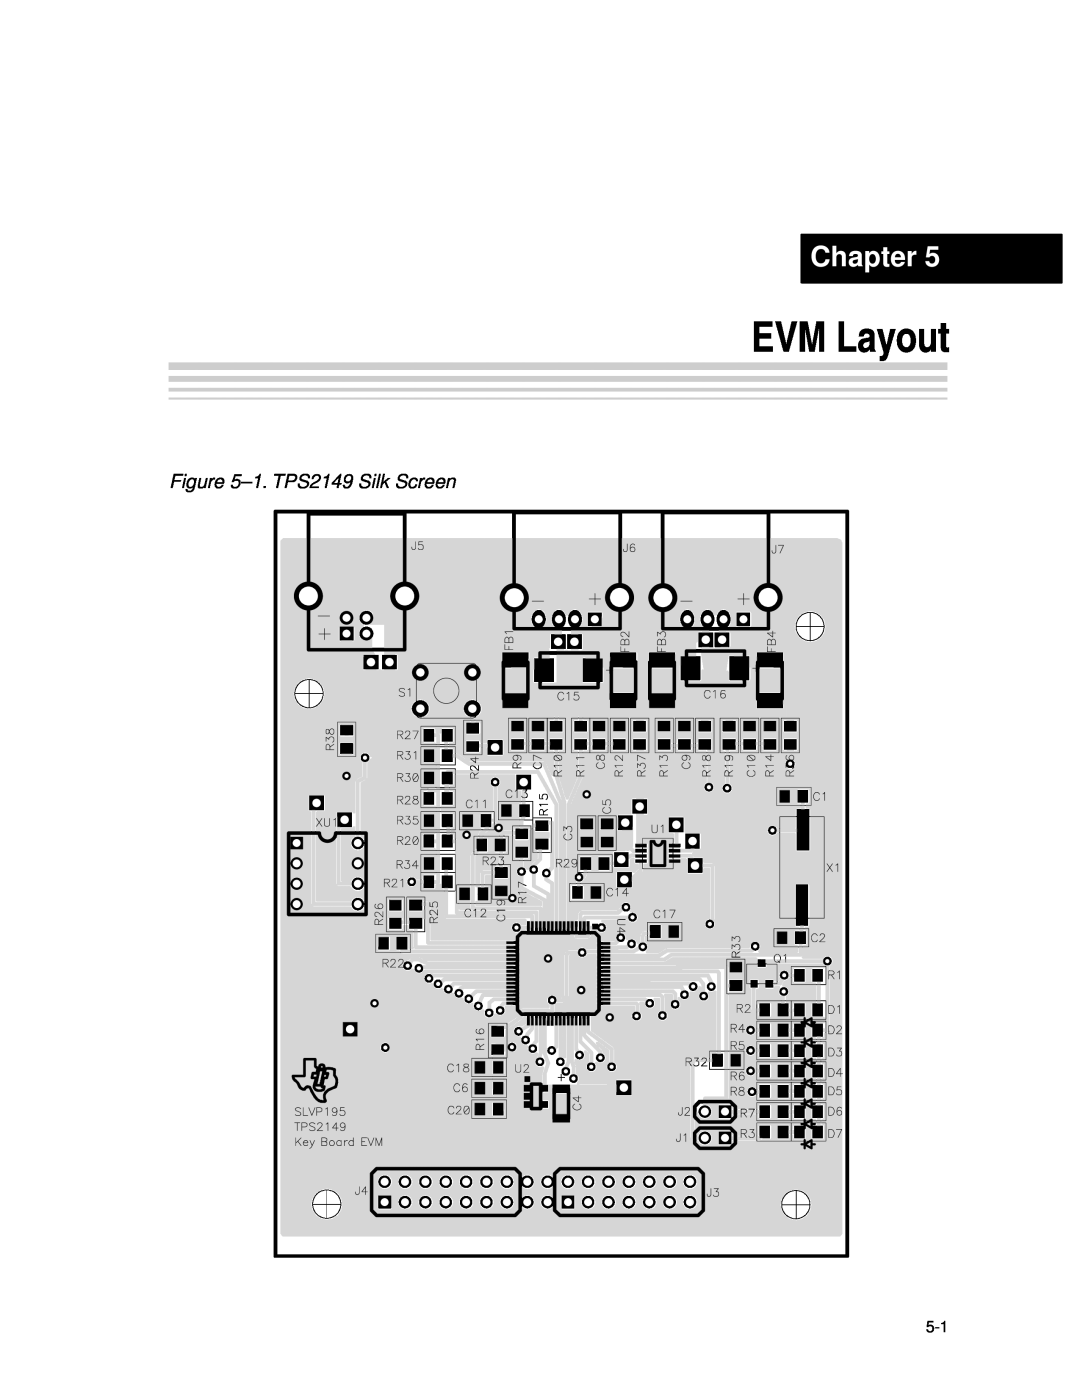 Texas Instruments manual EVM Layout, 1. TPS2149 Silk Screen, Chapter 